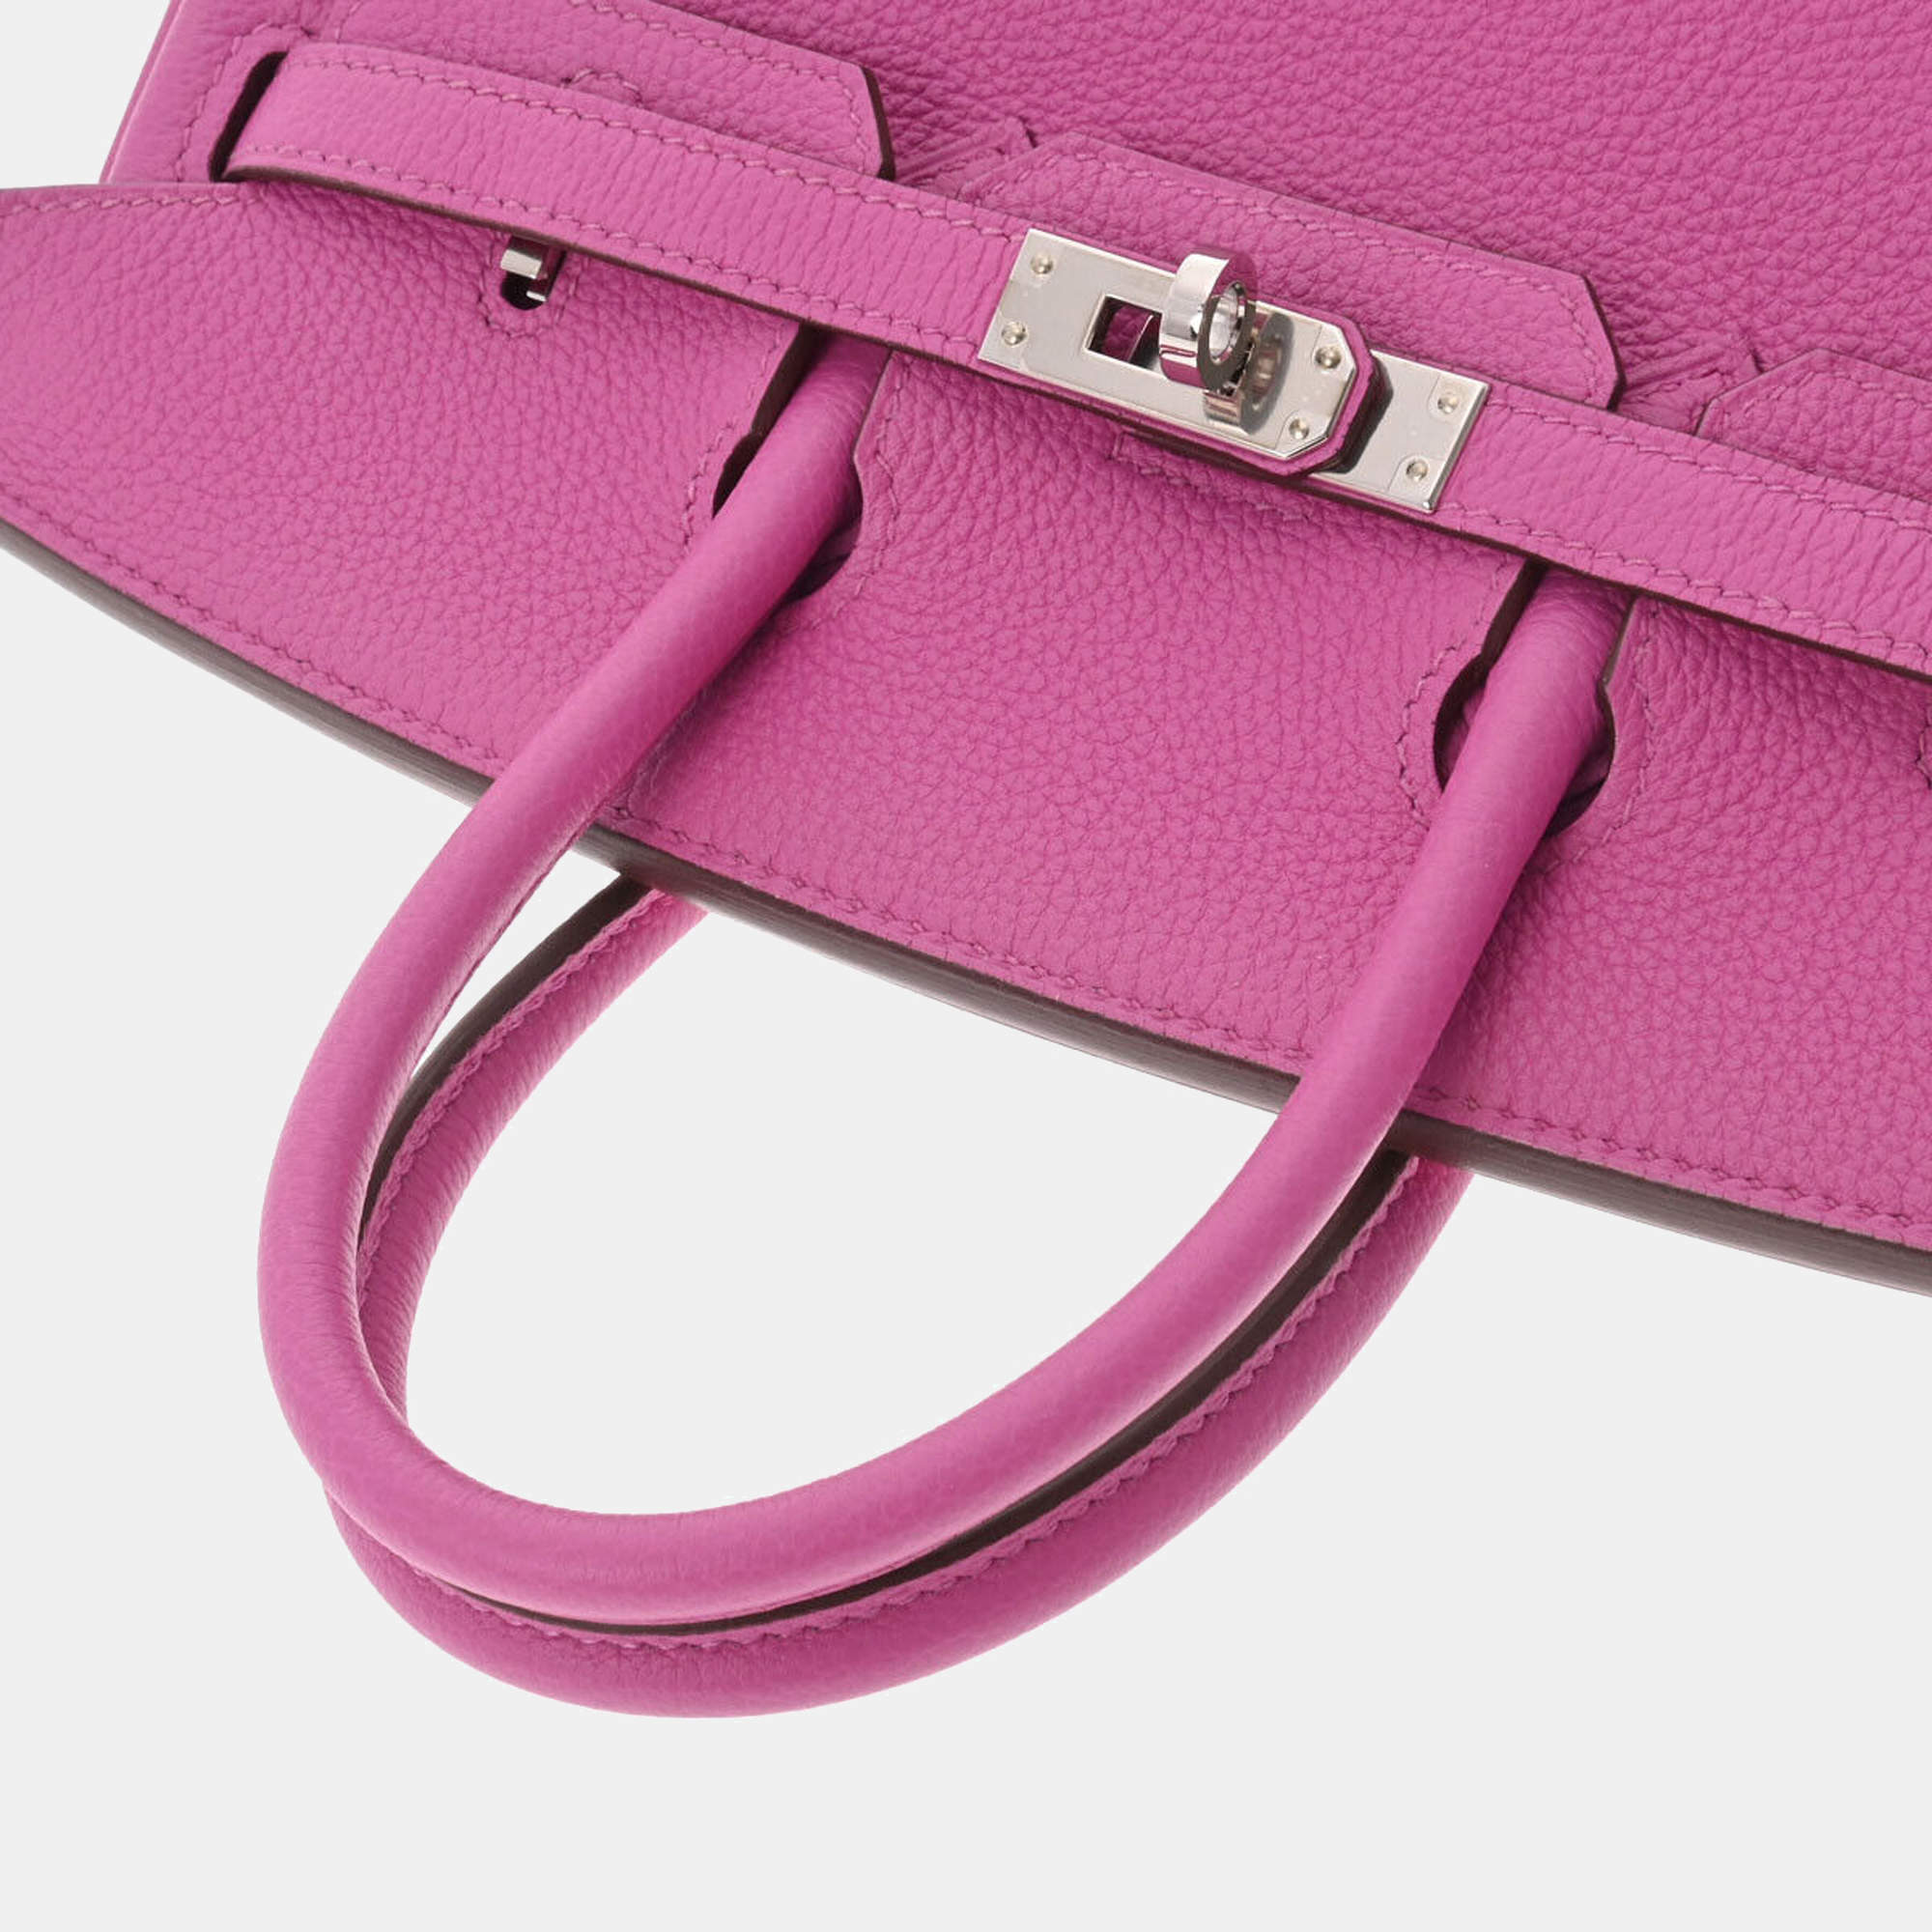 Hermes Pink Togo Leather Palladium Hardware Birkin 25 Bag Hermes